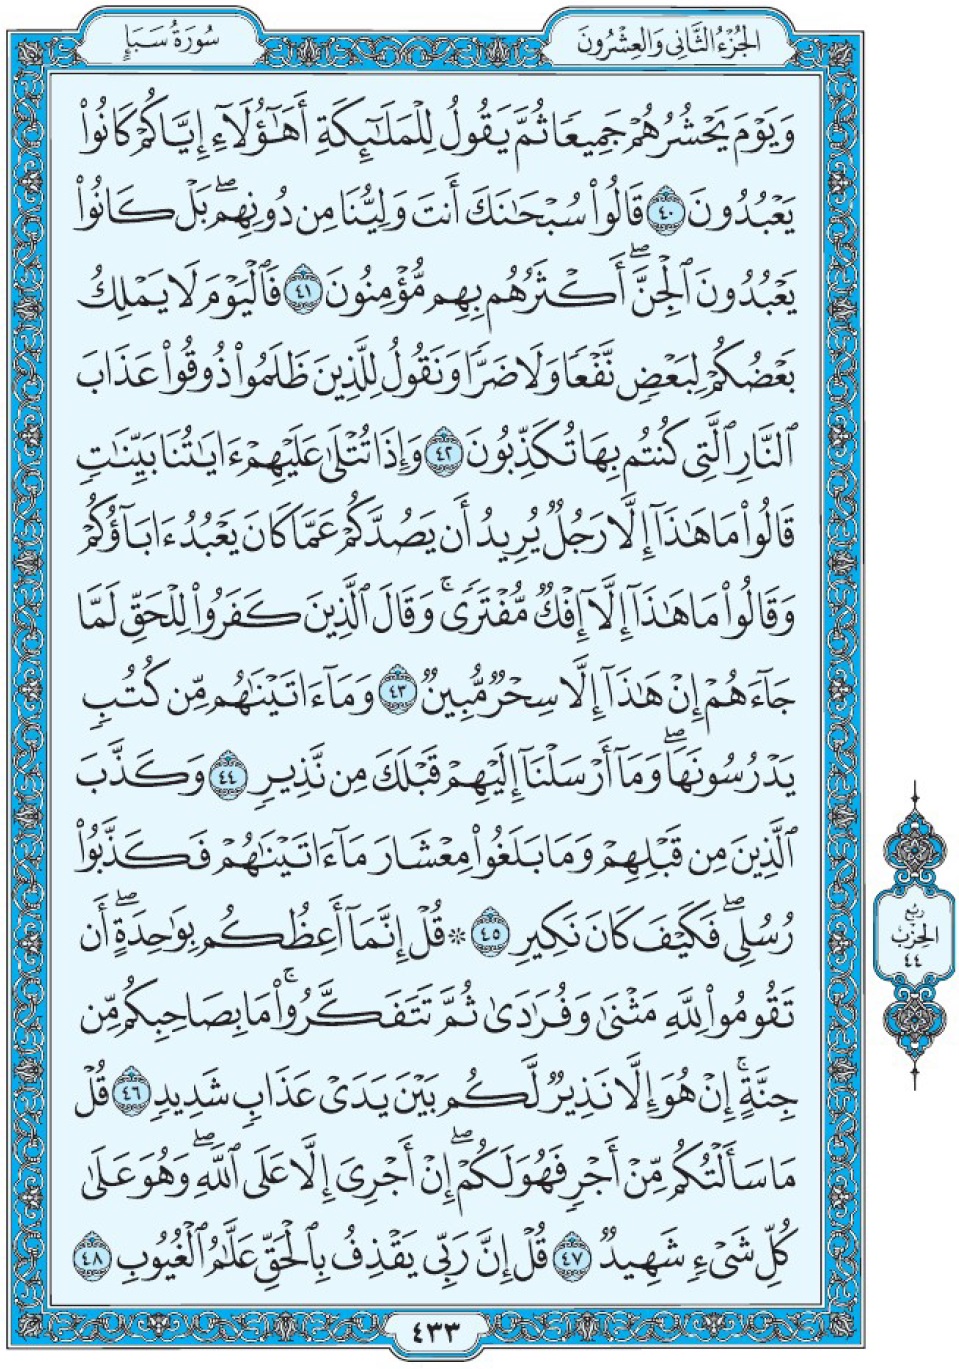 Коран Мединский мусхаф страница 433, Саба, аят 40-48